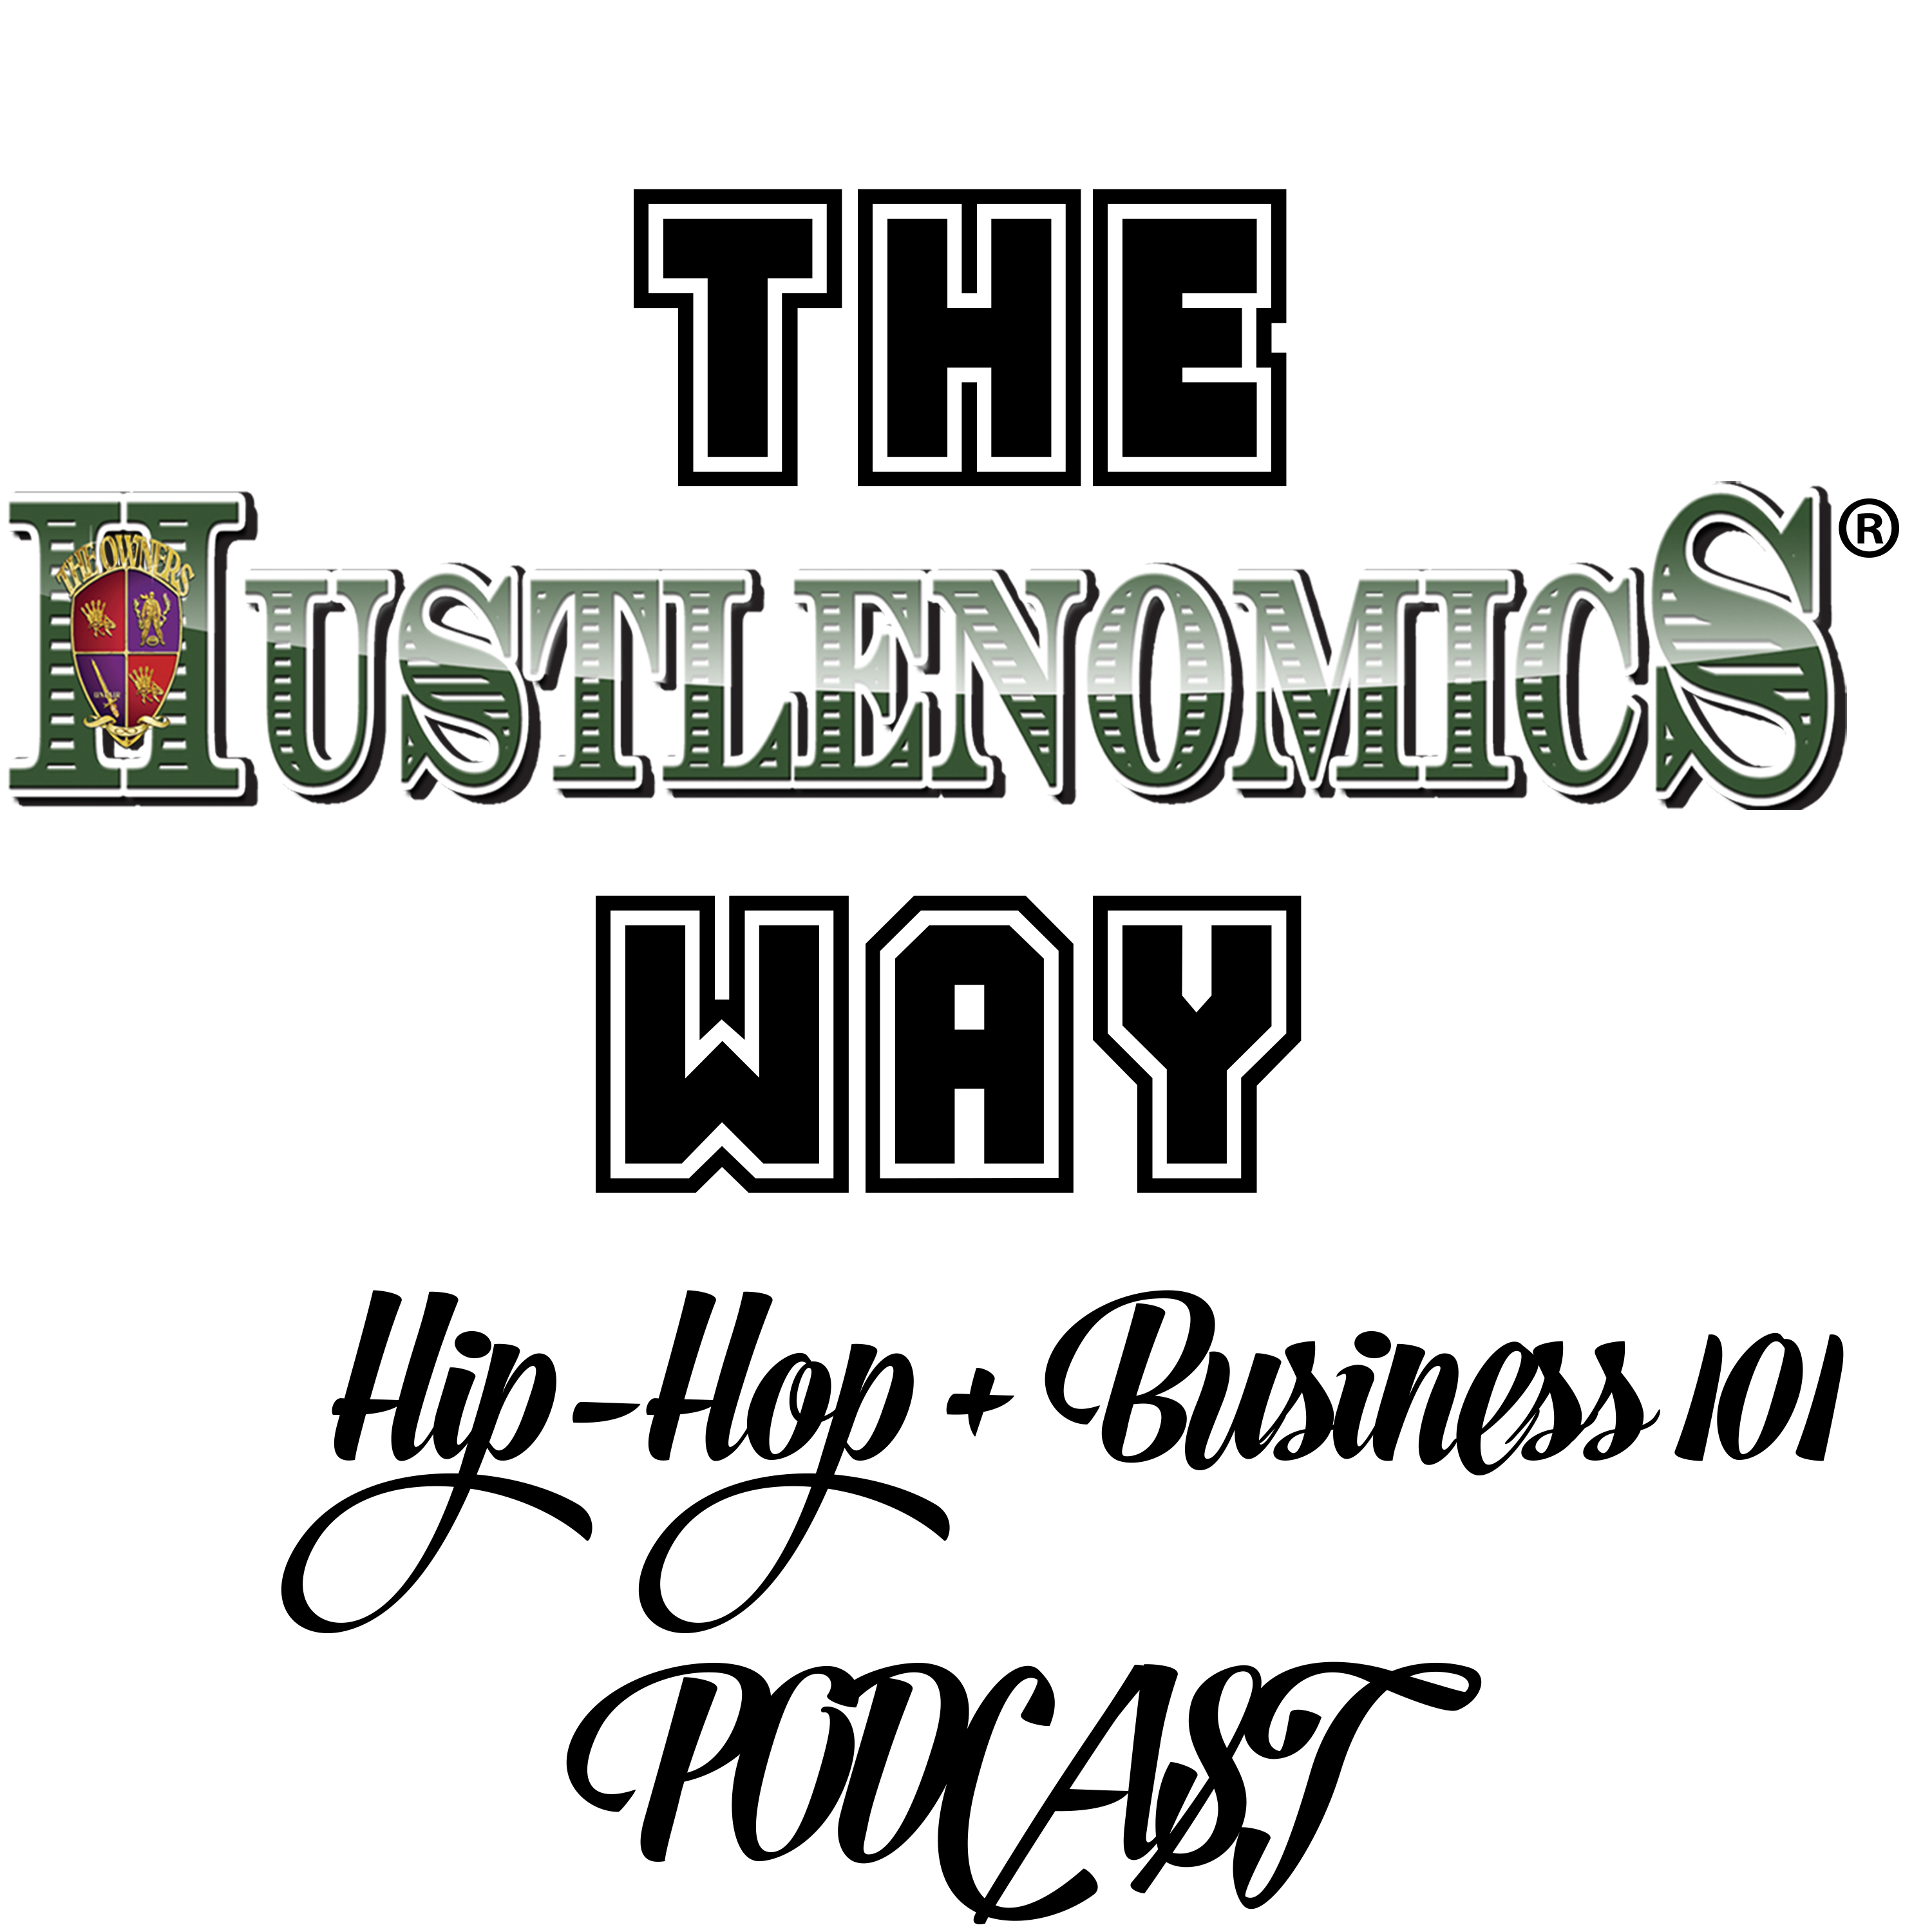 The Hustlenomics Way. Hip-Hop+ Business 101.